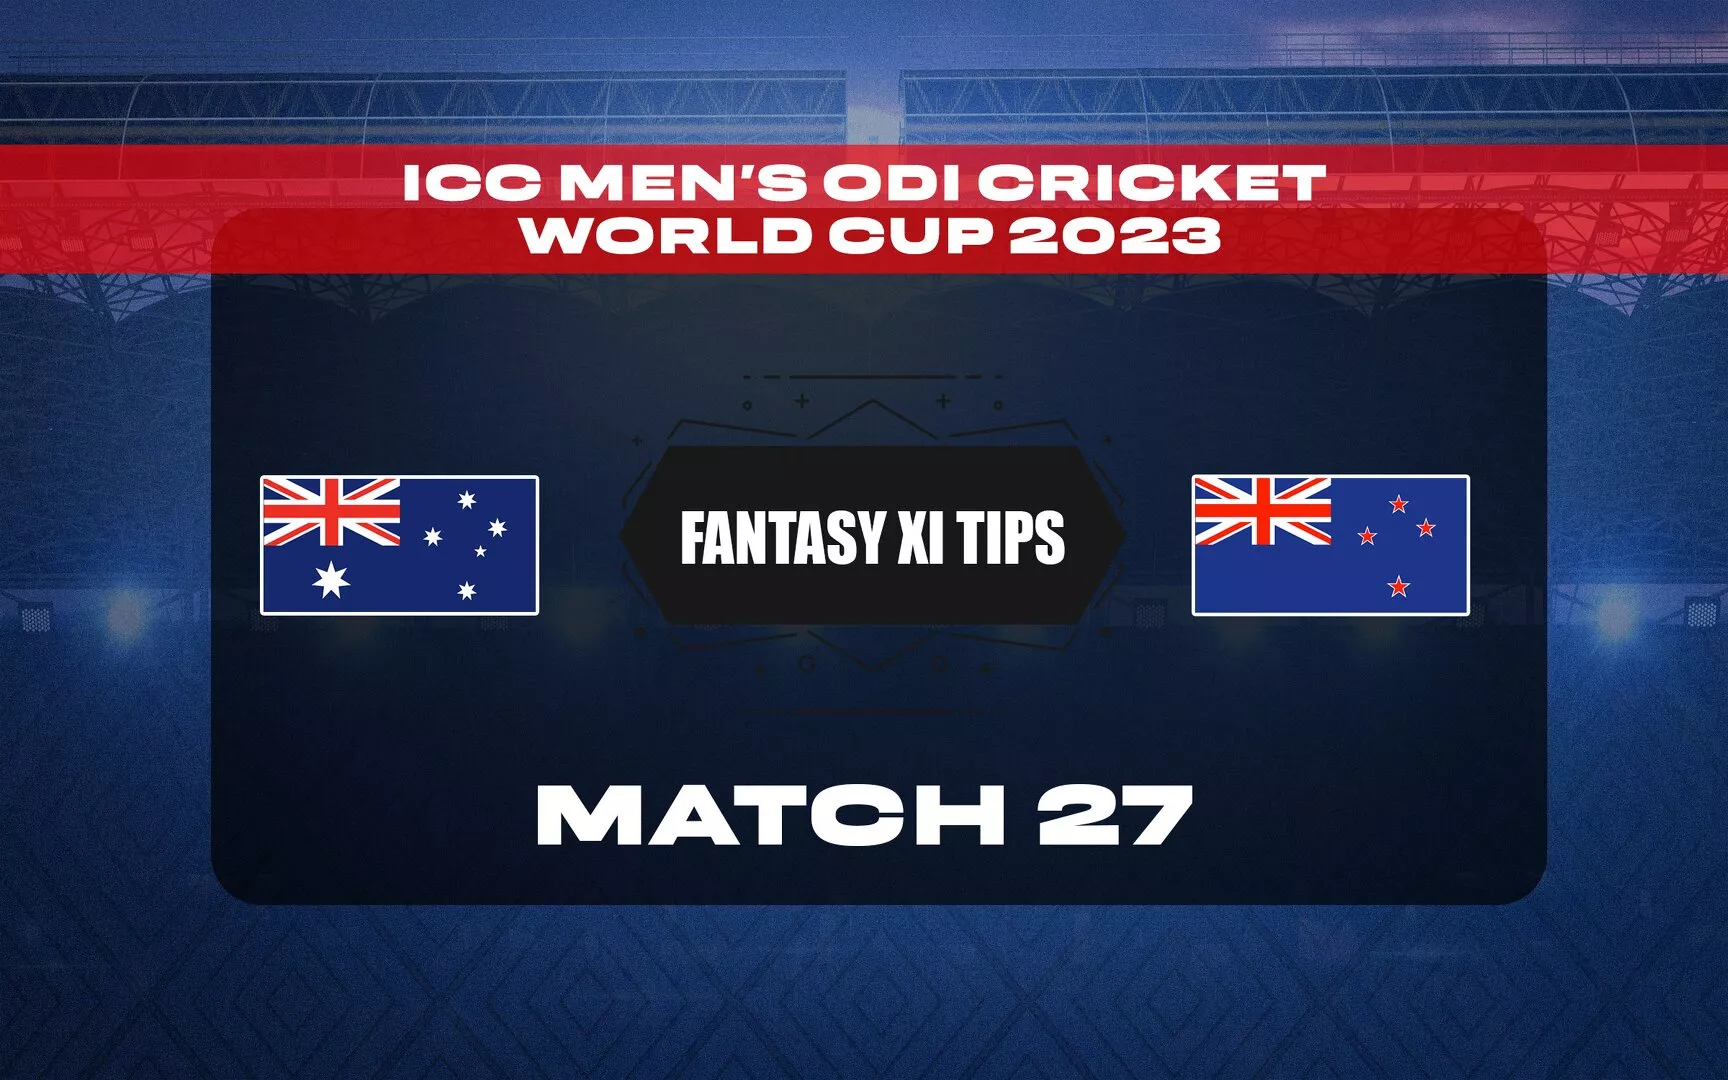 AUS vs NZ Dream11 Prediction, Dream11 Playing XI, Today Match 27, ICC Men’s ODI Cricket World Cup 2023